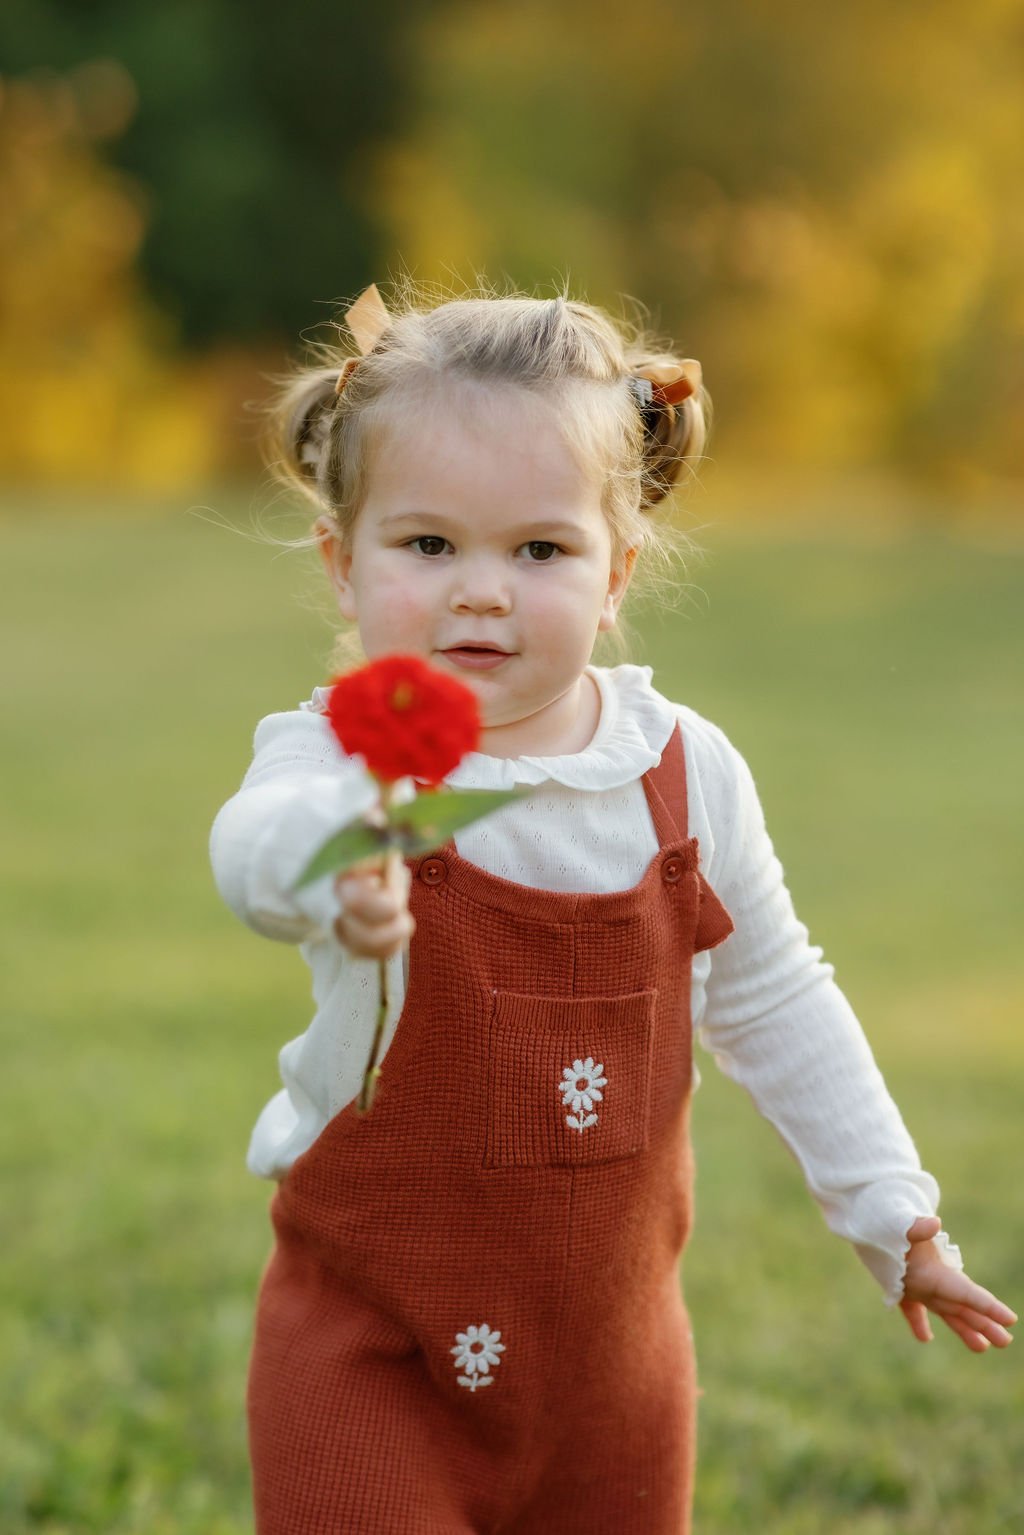 gatlinburg-photographers-widflower-photos-with-gatlinburg-photographer-girl-holding-flower